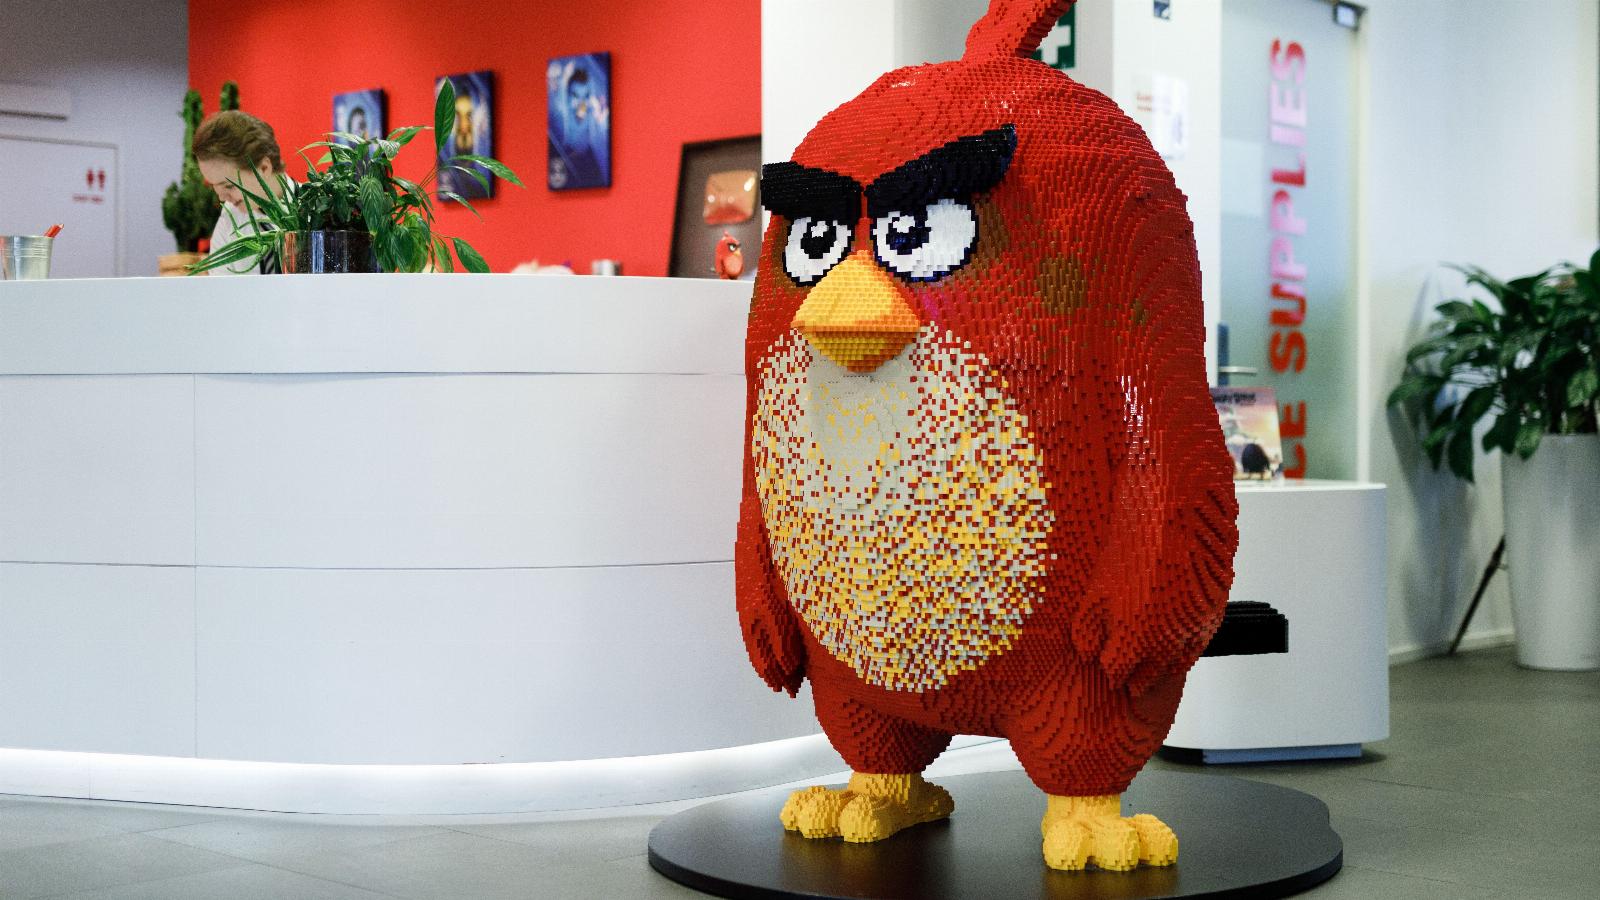 Sega to acquire Angry Birds-maker Rovio for $775M